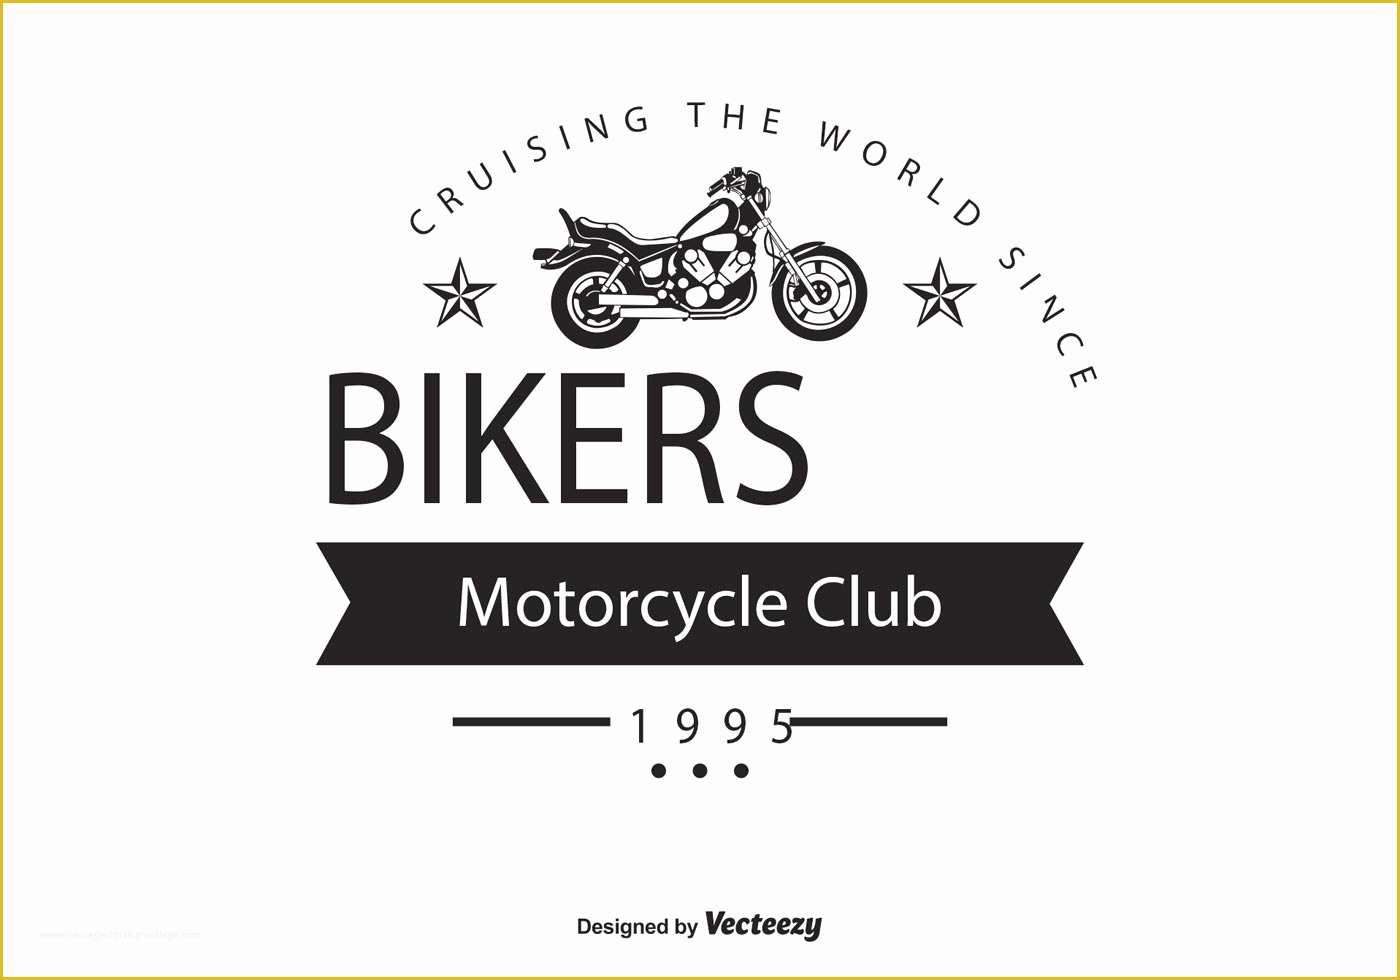 Motorcycle Club Logo Template Free Of Biker Free Vector Art 826 Free Downloads